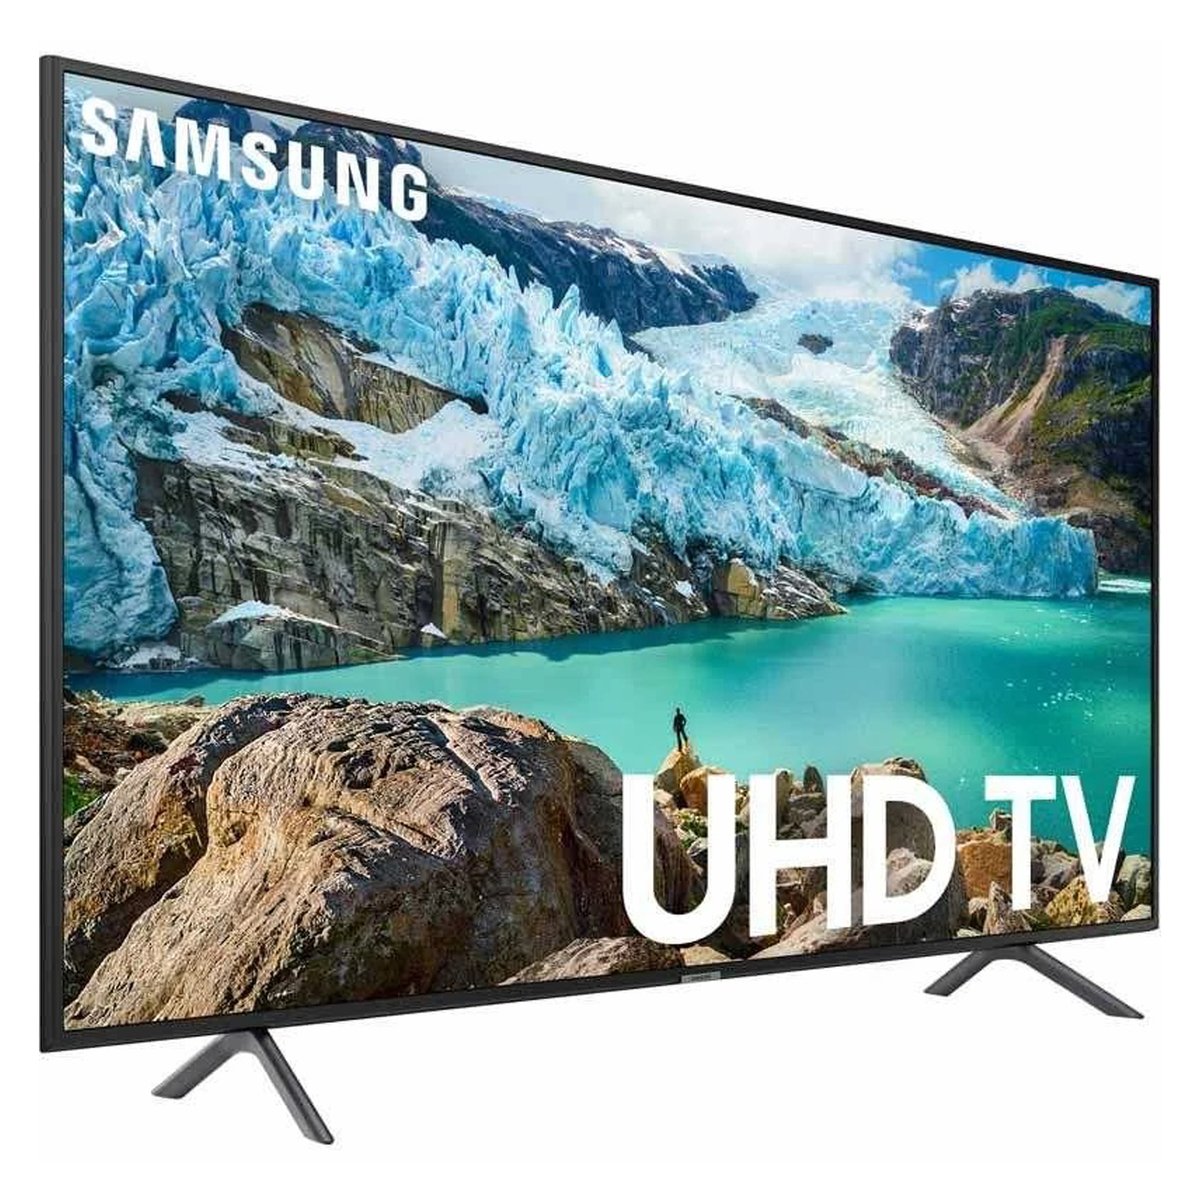 Samsung 4K Ultra HD Smart LED TV 43RU7100RXUM 43"